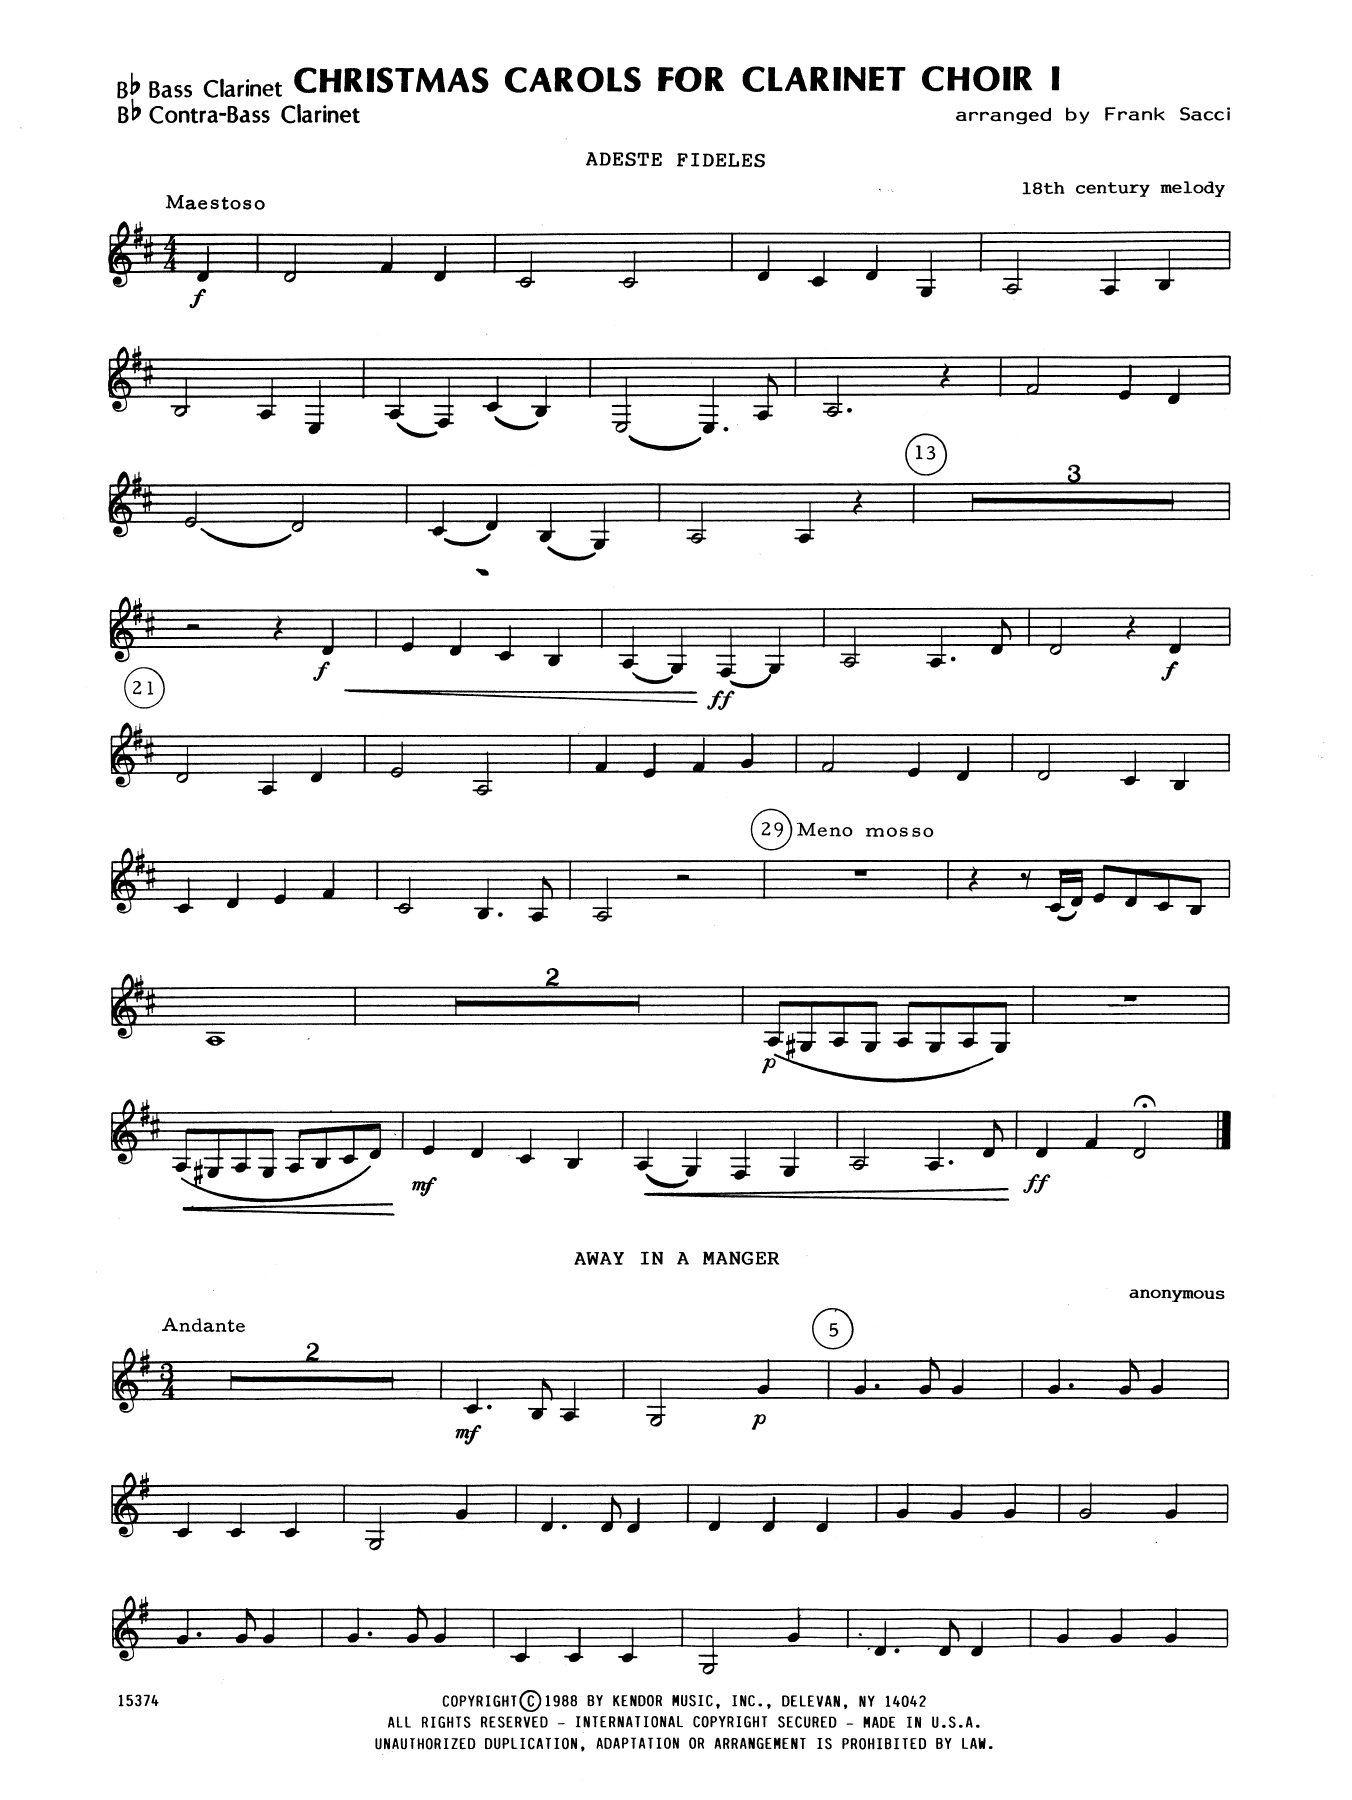 Download Frank Sacci Christmas Carols For Clarinet Choir I - Sheet Music